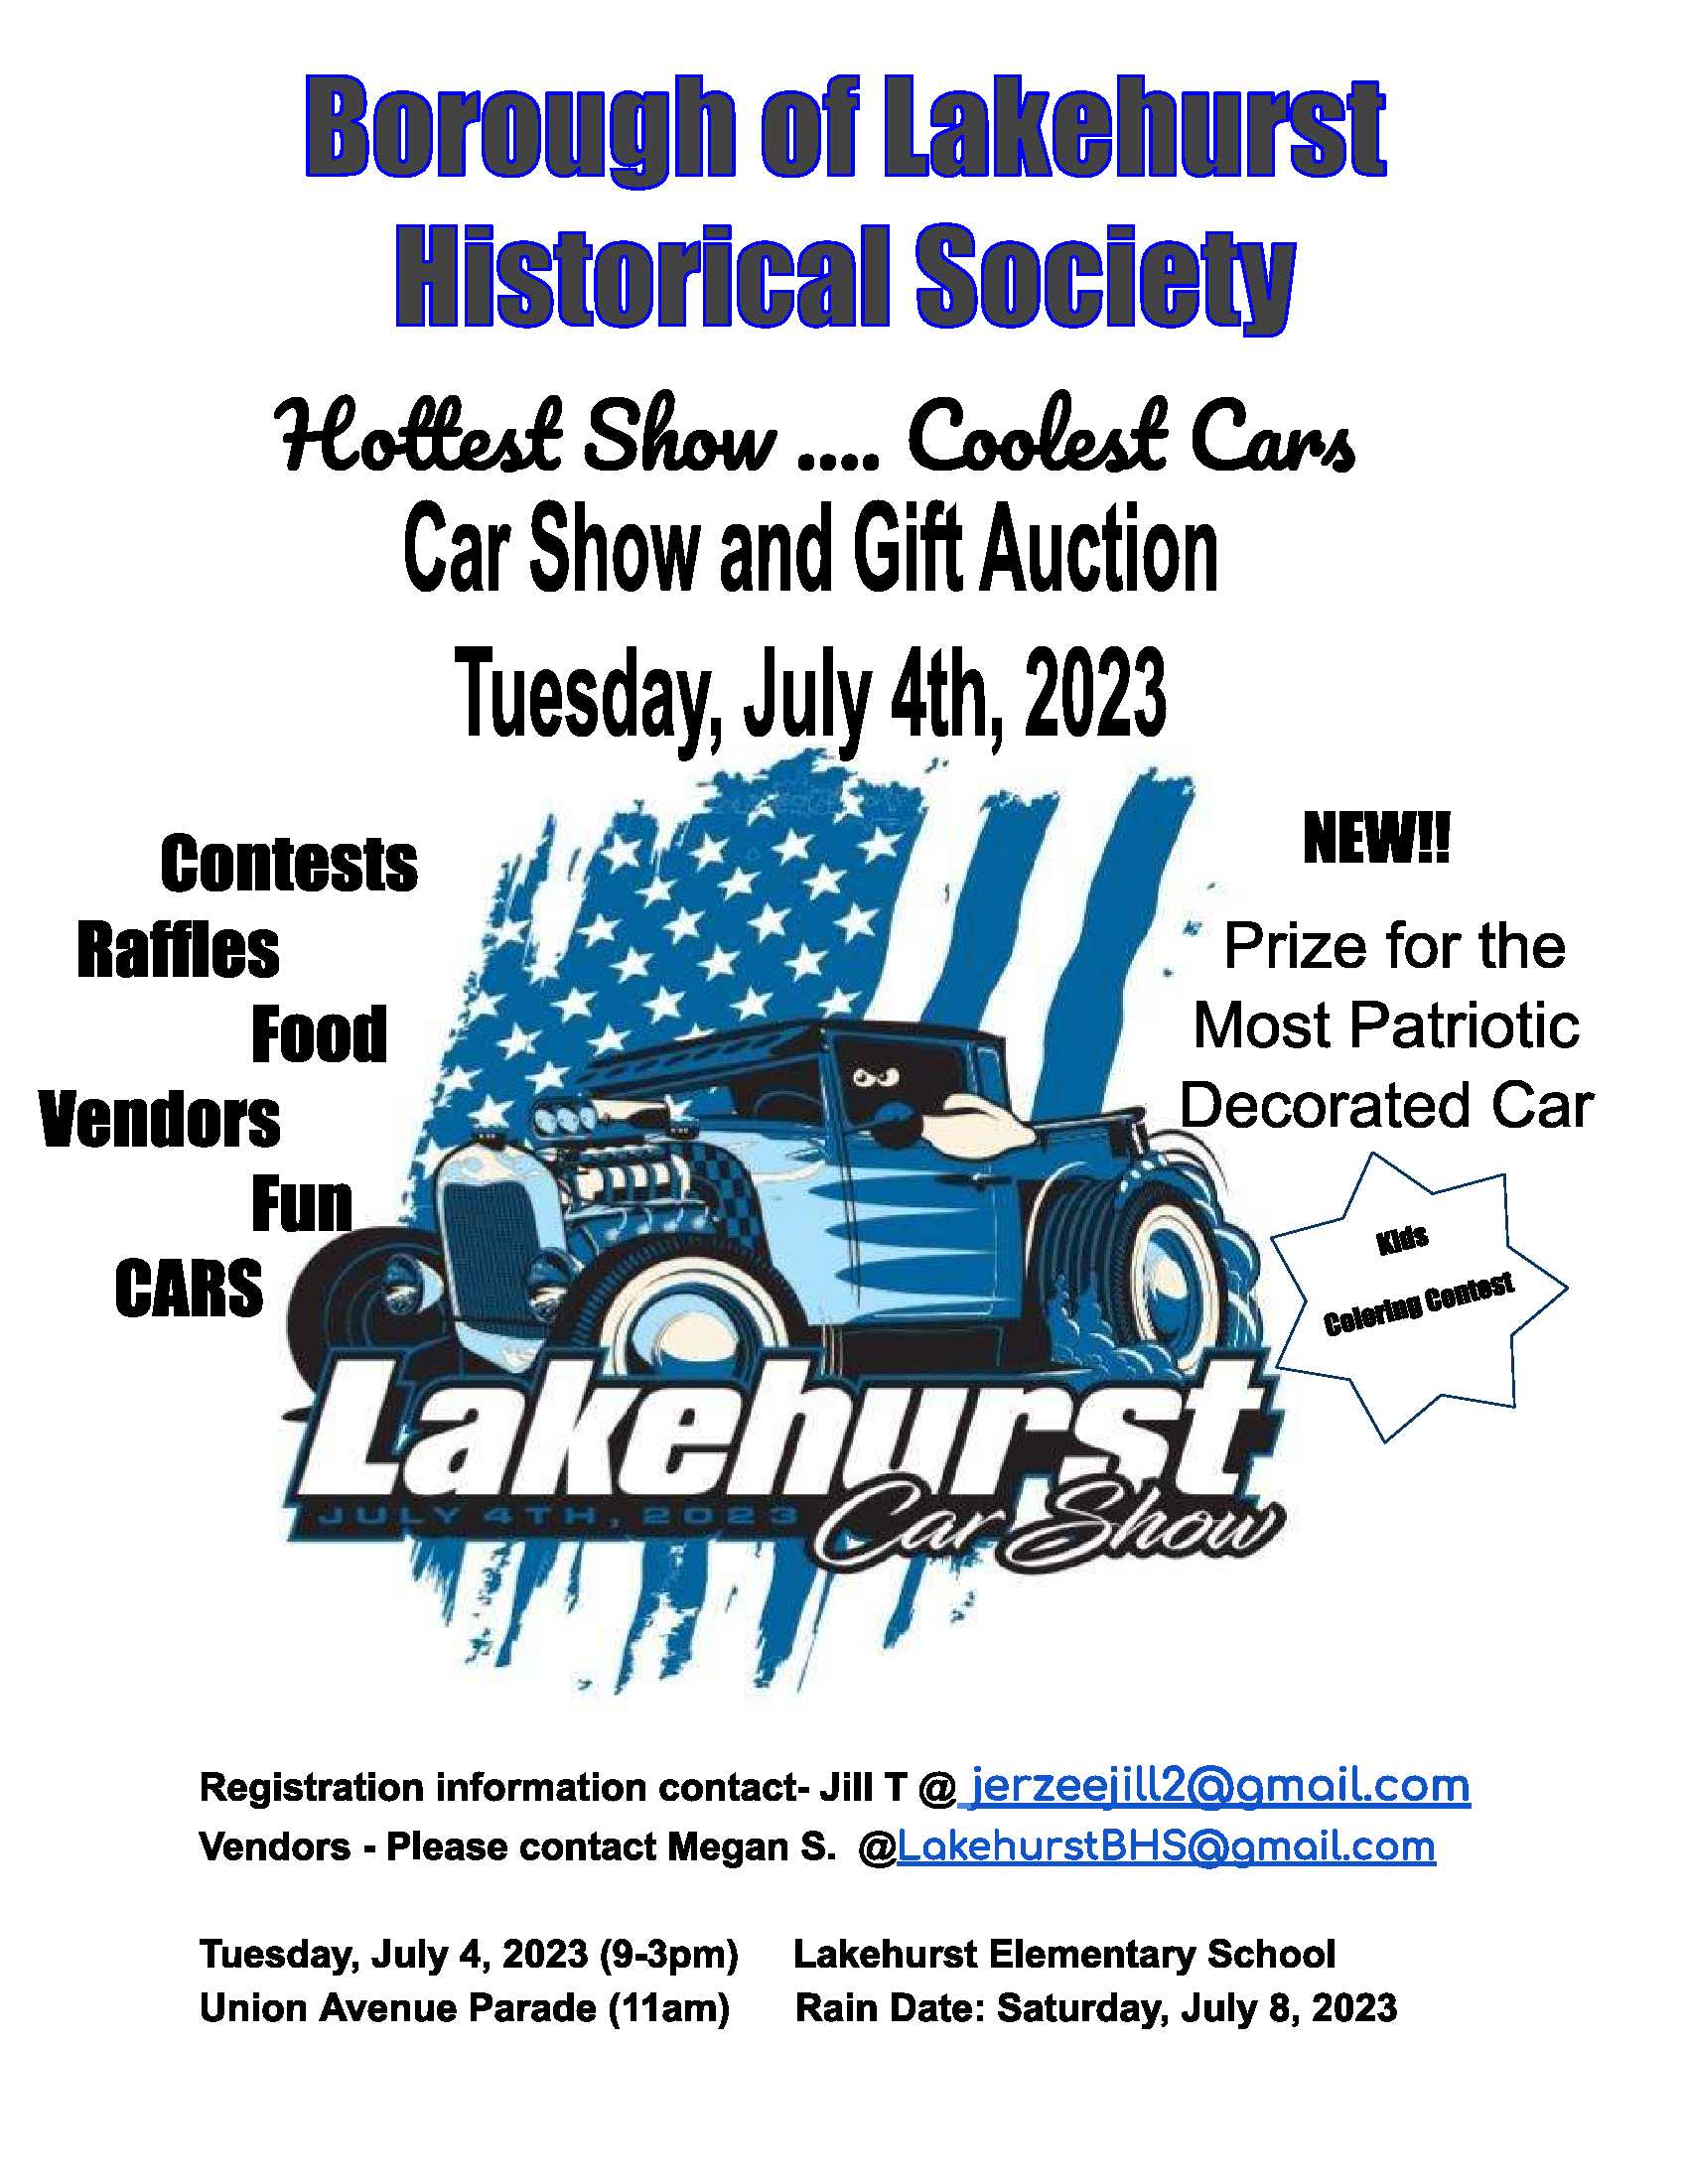 Car Show Gift Auction 070423